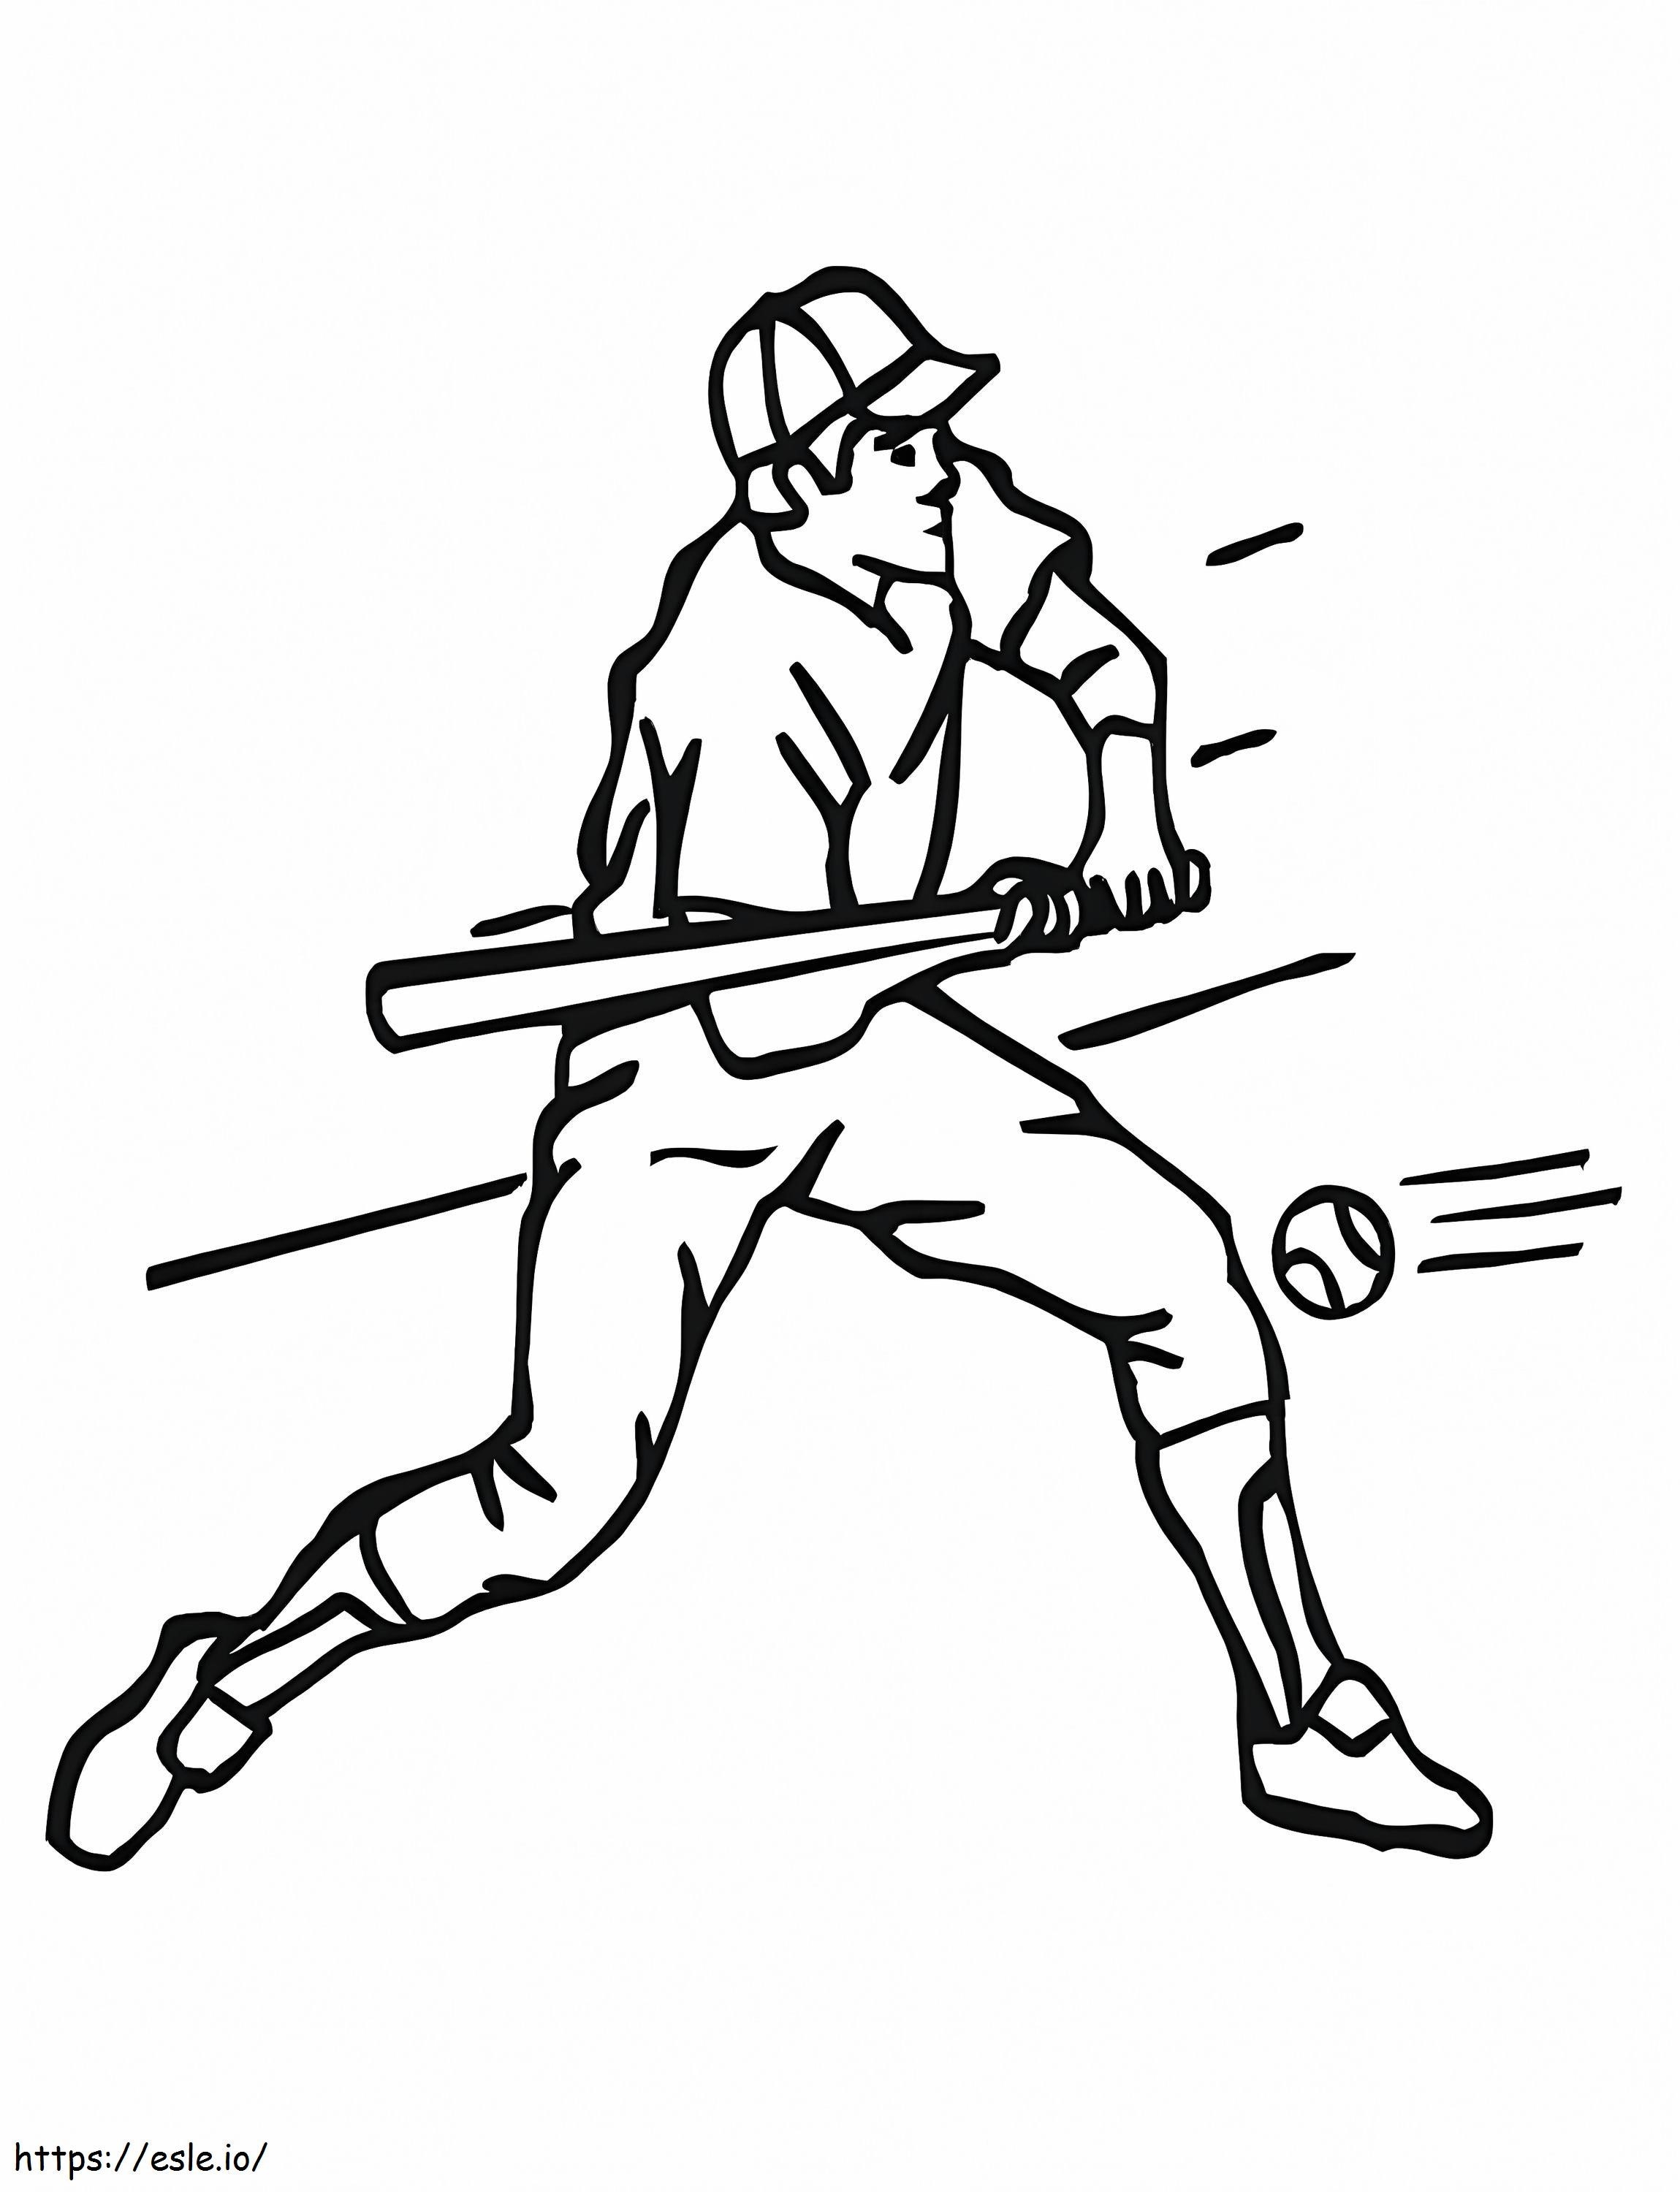 Baseball Player 1 coloring page